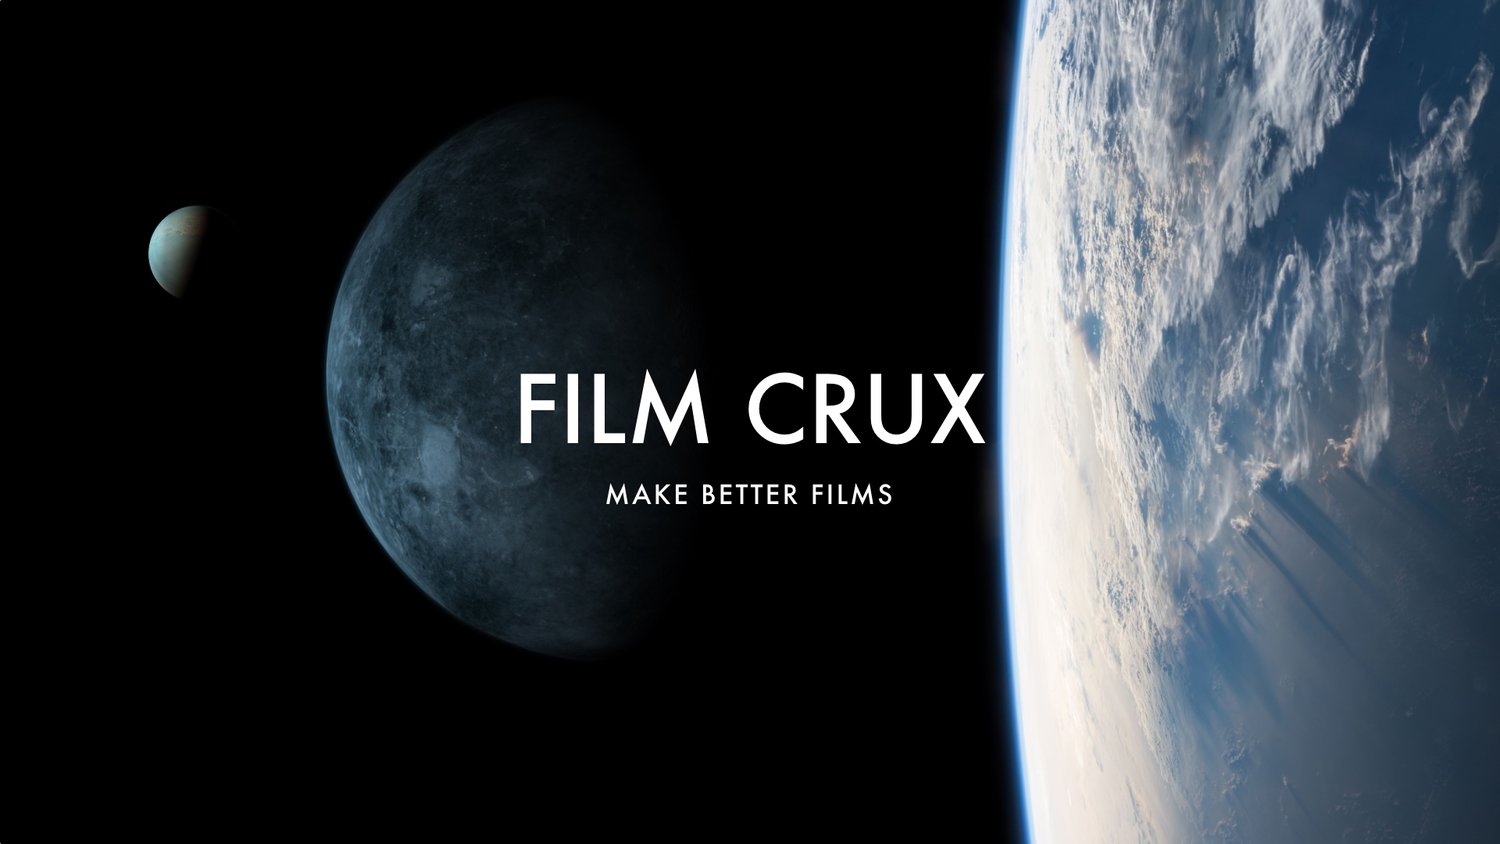 www.filmcrux.com